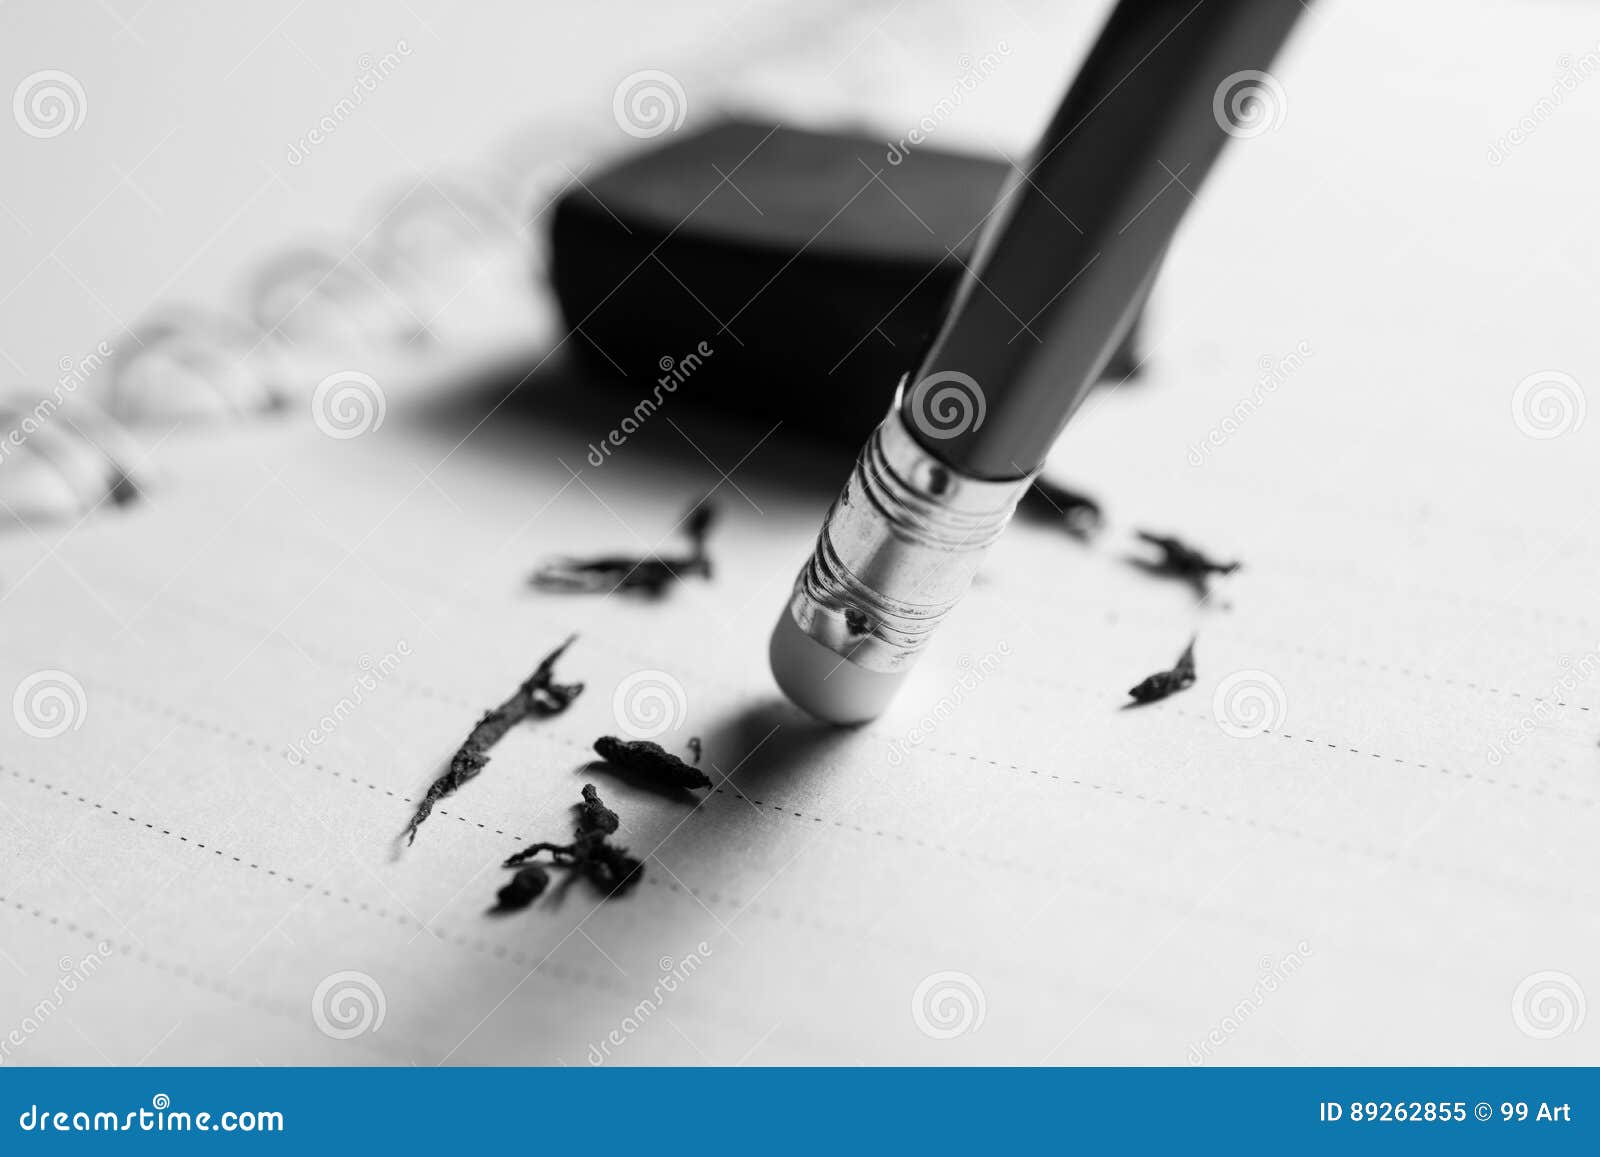 pencil eraser removing a written mistake on a piece of paper, de